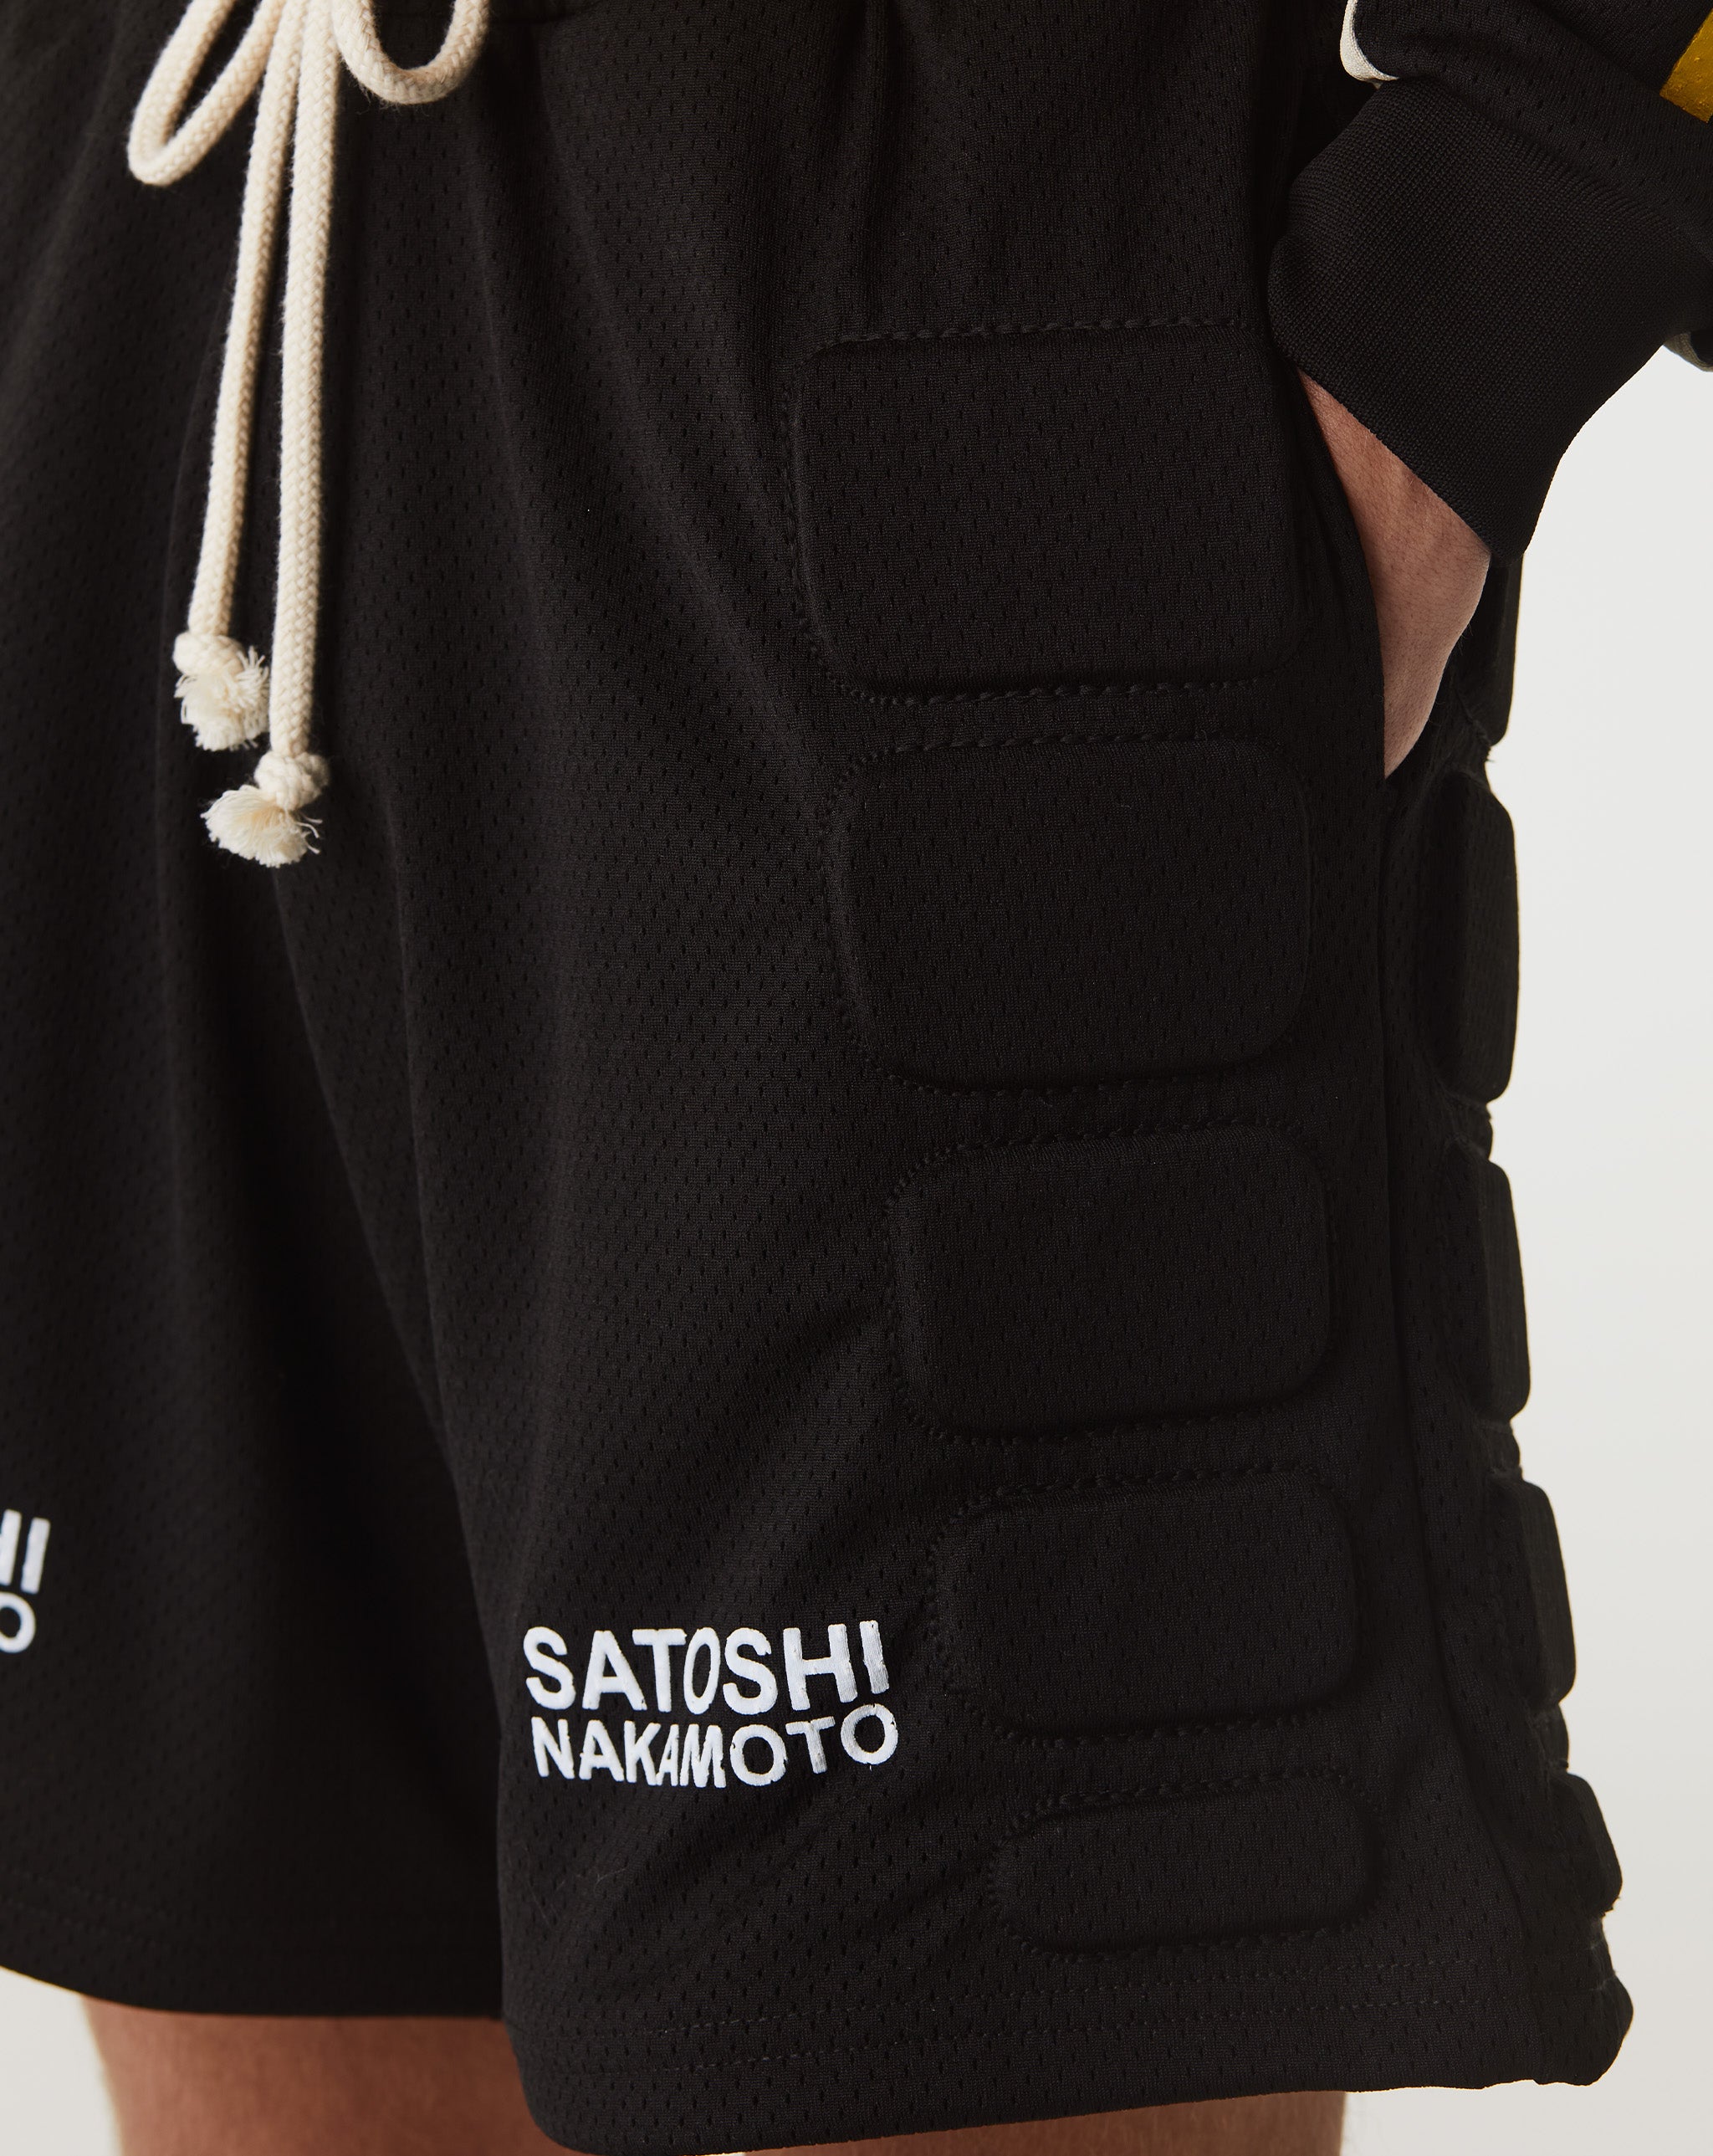 Satoshi Nakamoto Sporty & Rich  - Cheap Cerbe Jordan outlet